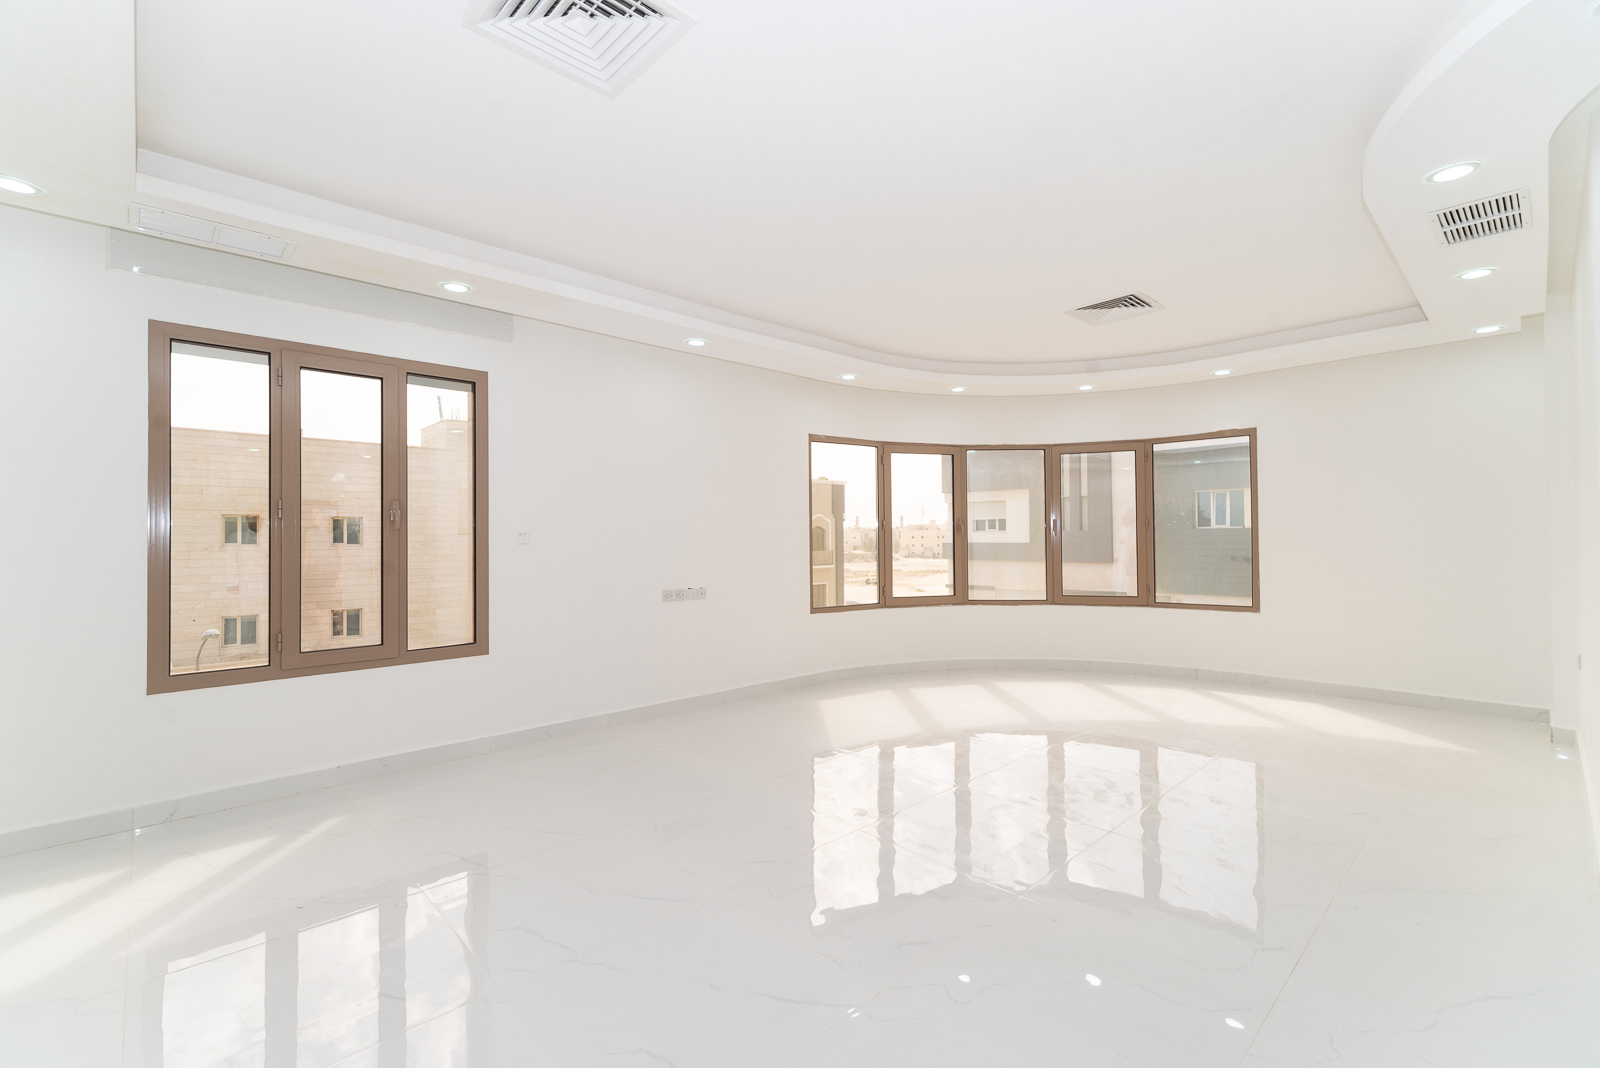 Abu Fatira – great, four master bedroom floor